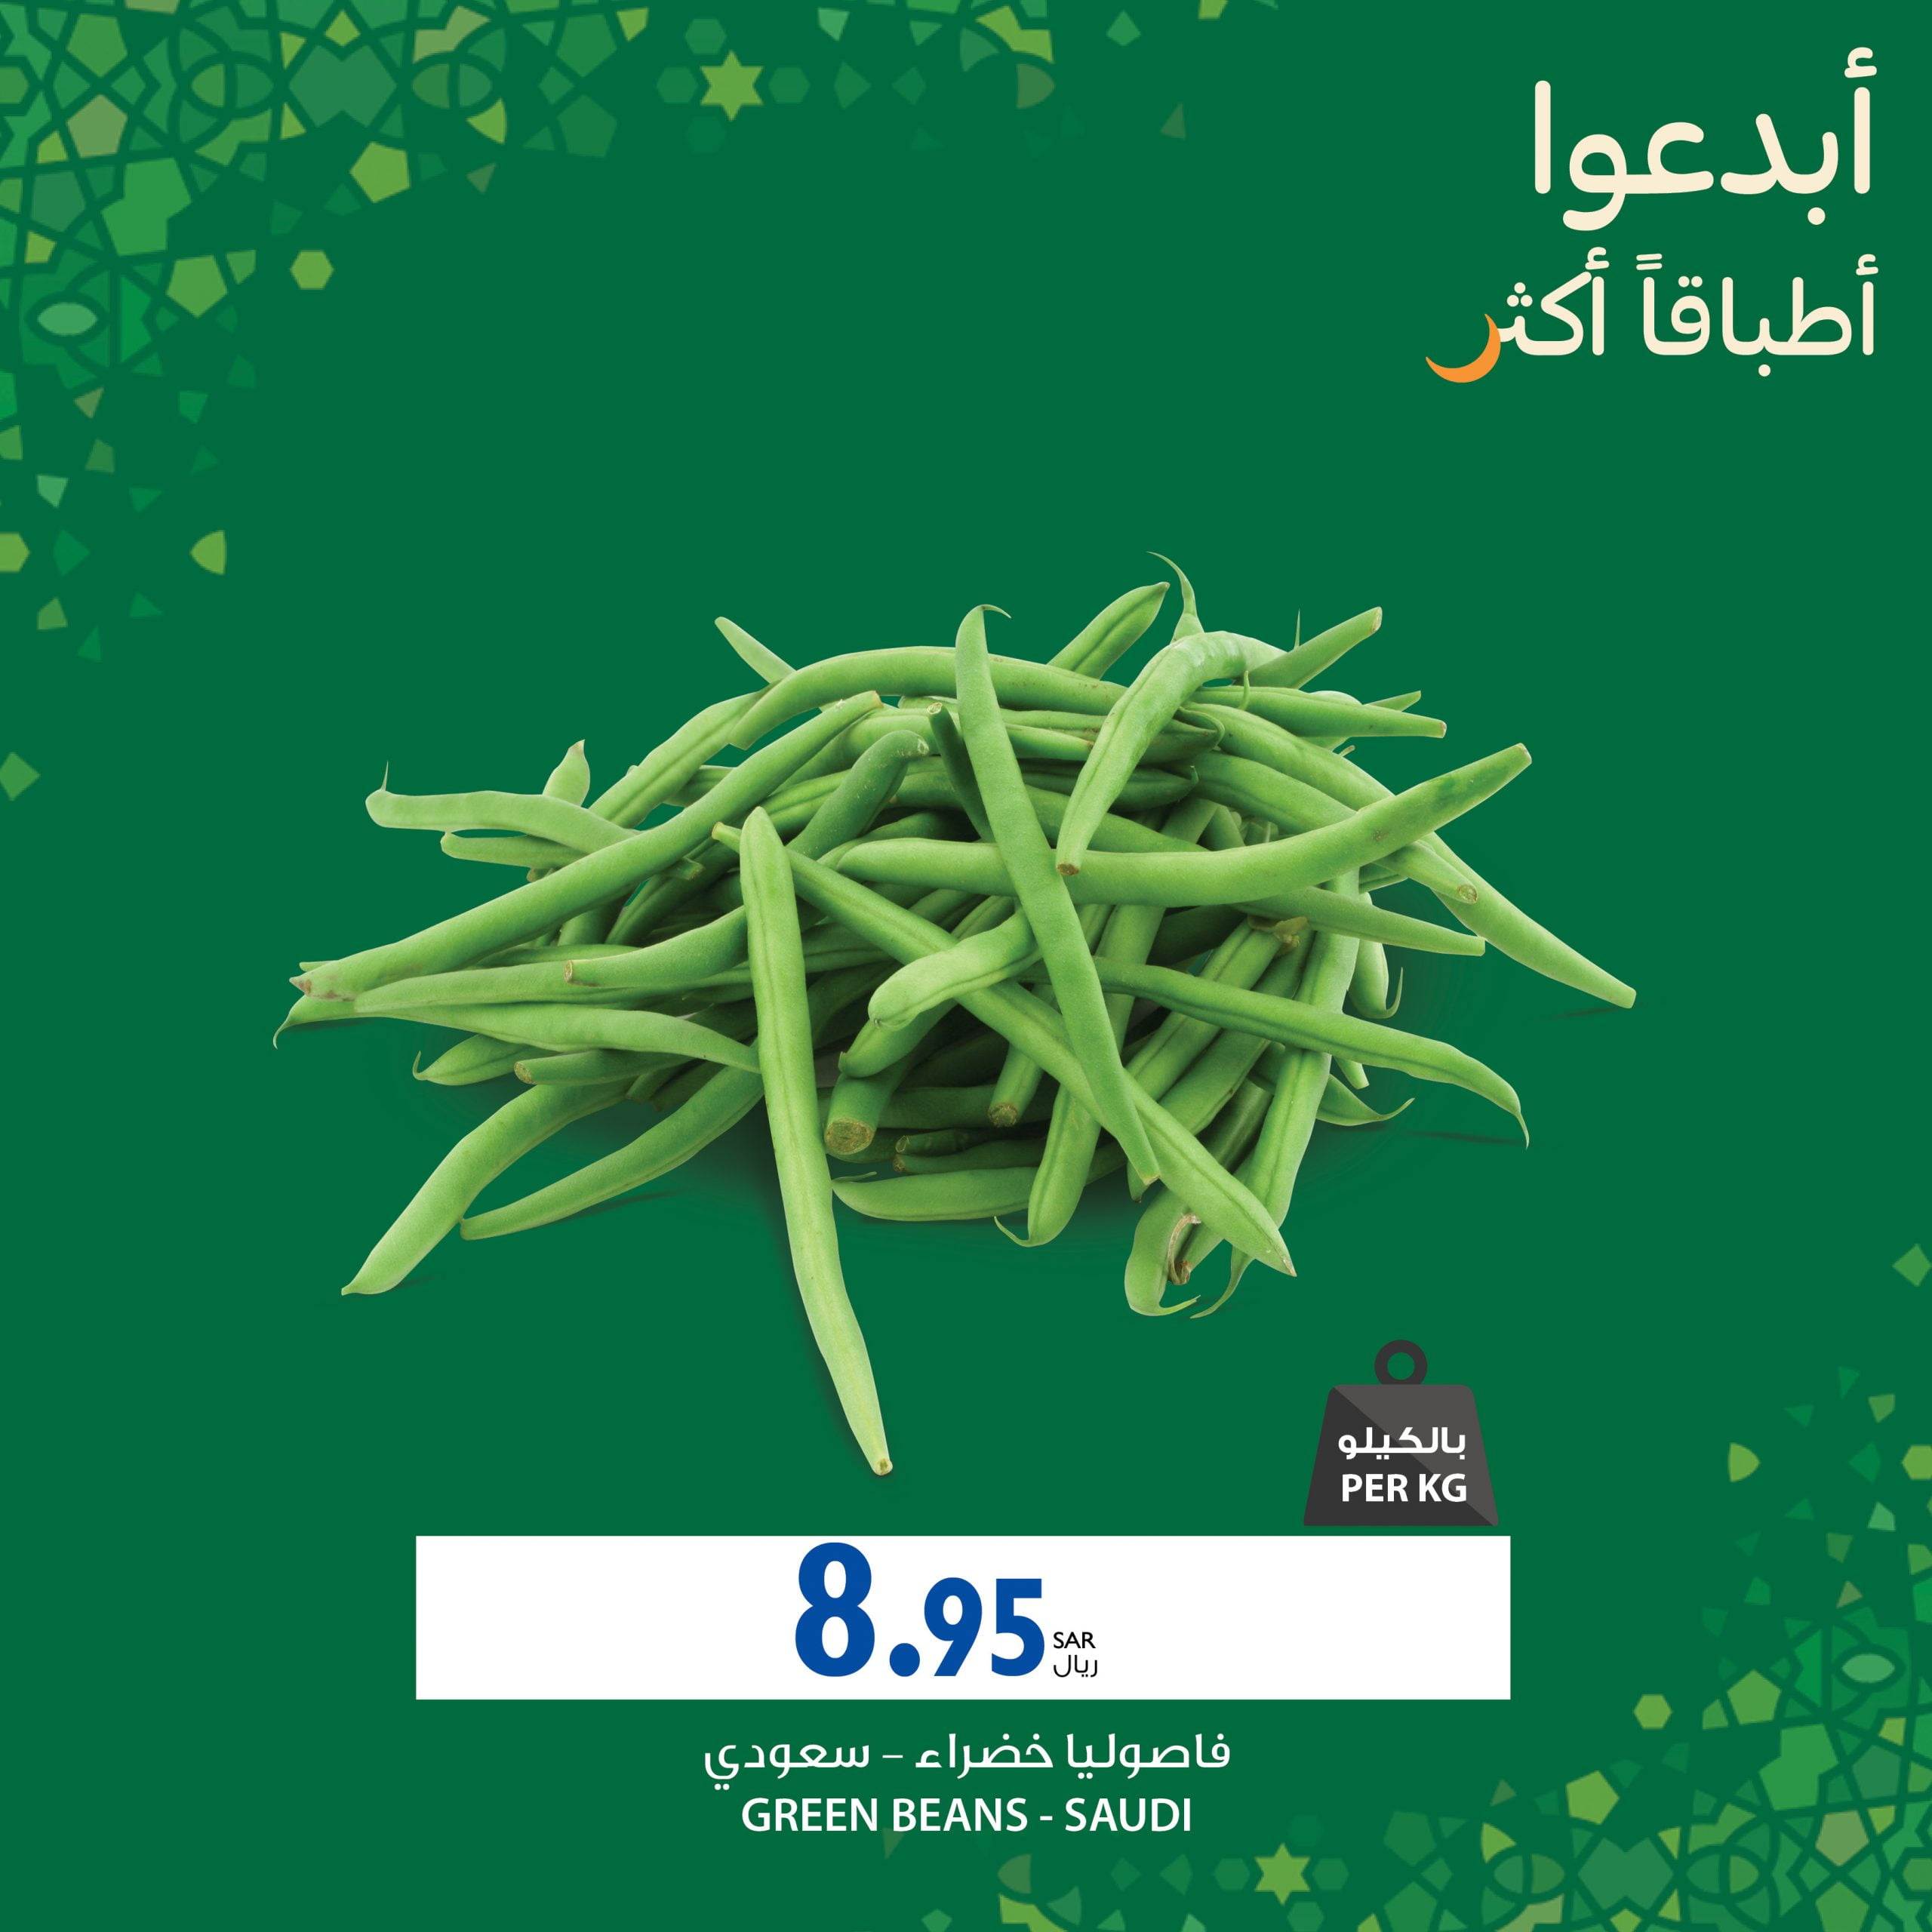 CarrefourSaudi 1260827185713045505 1 scaled - عروض رمضان : عروض كارفور السعودية عروض خضروات اليوم لمدة ٣ ايام بين ٢١ و٢٣ رمضان